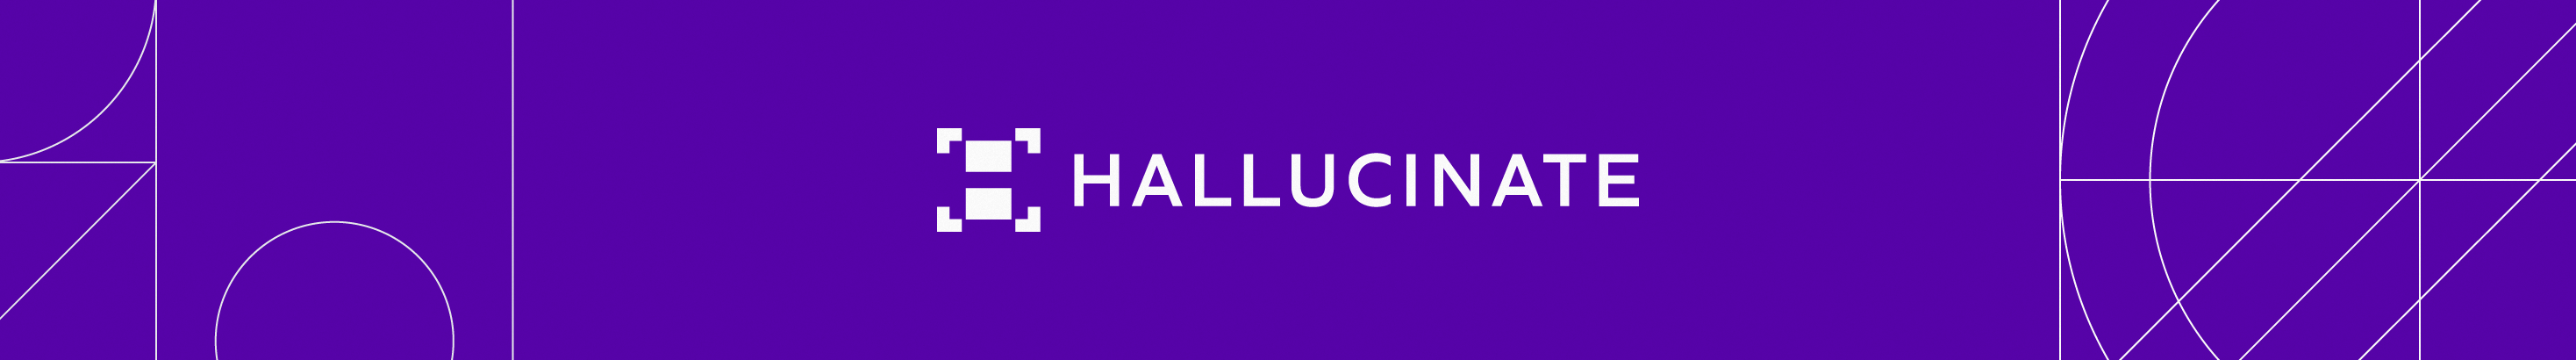 Hallucinate Design's profile banner